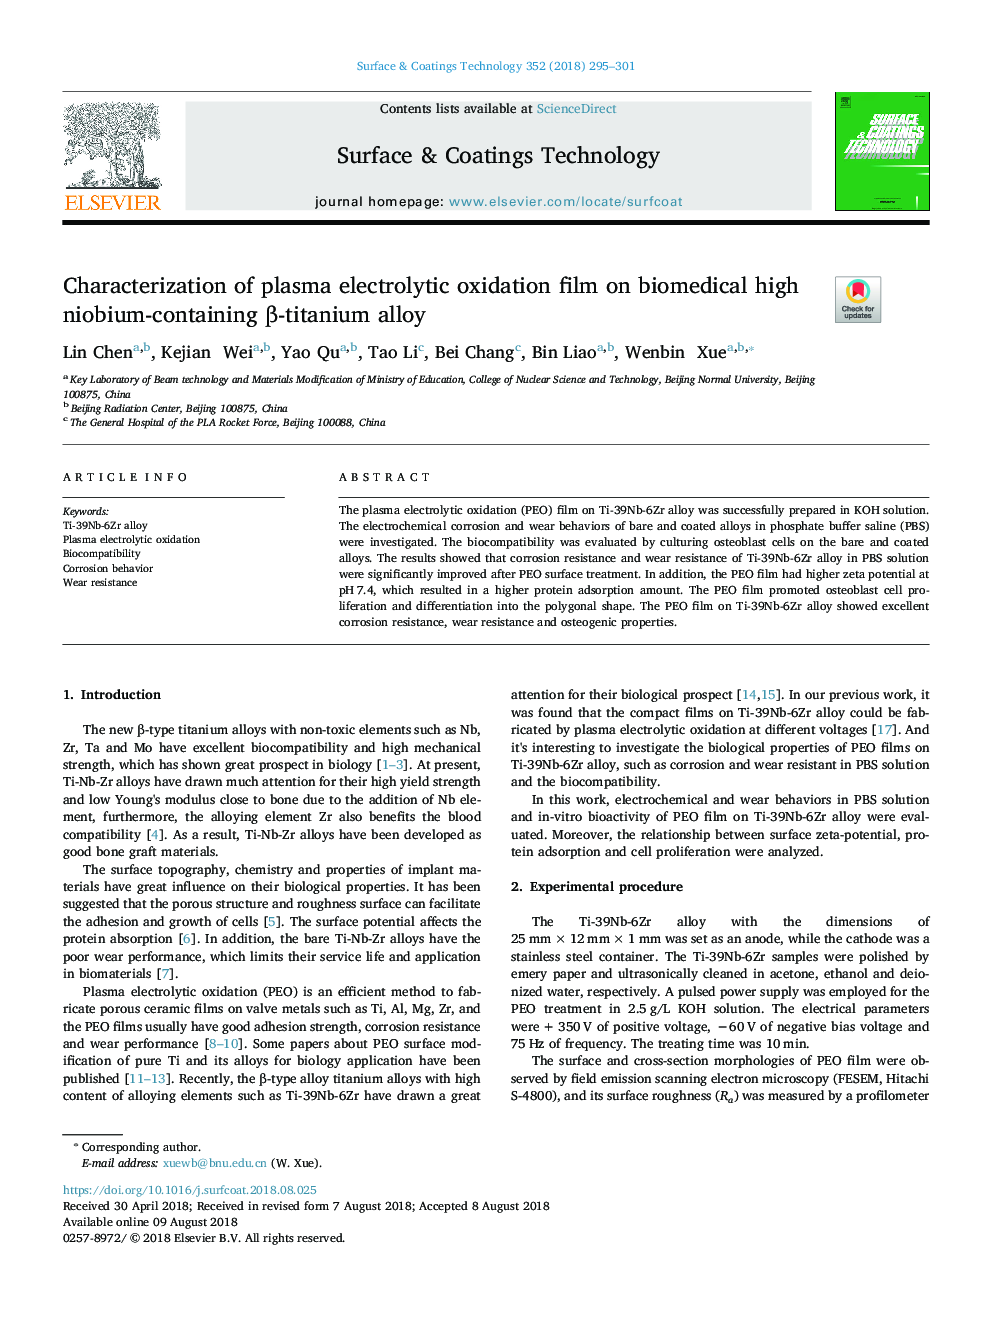 Characterization of plasma electrolytic oxidation film on biomedical high niobium-containing Î²âtitanium alloy